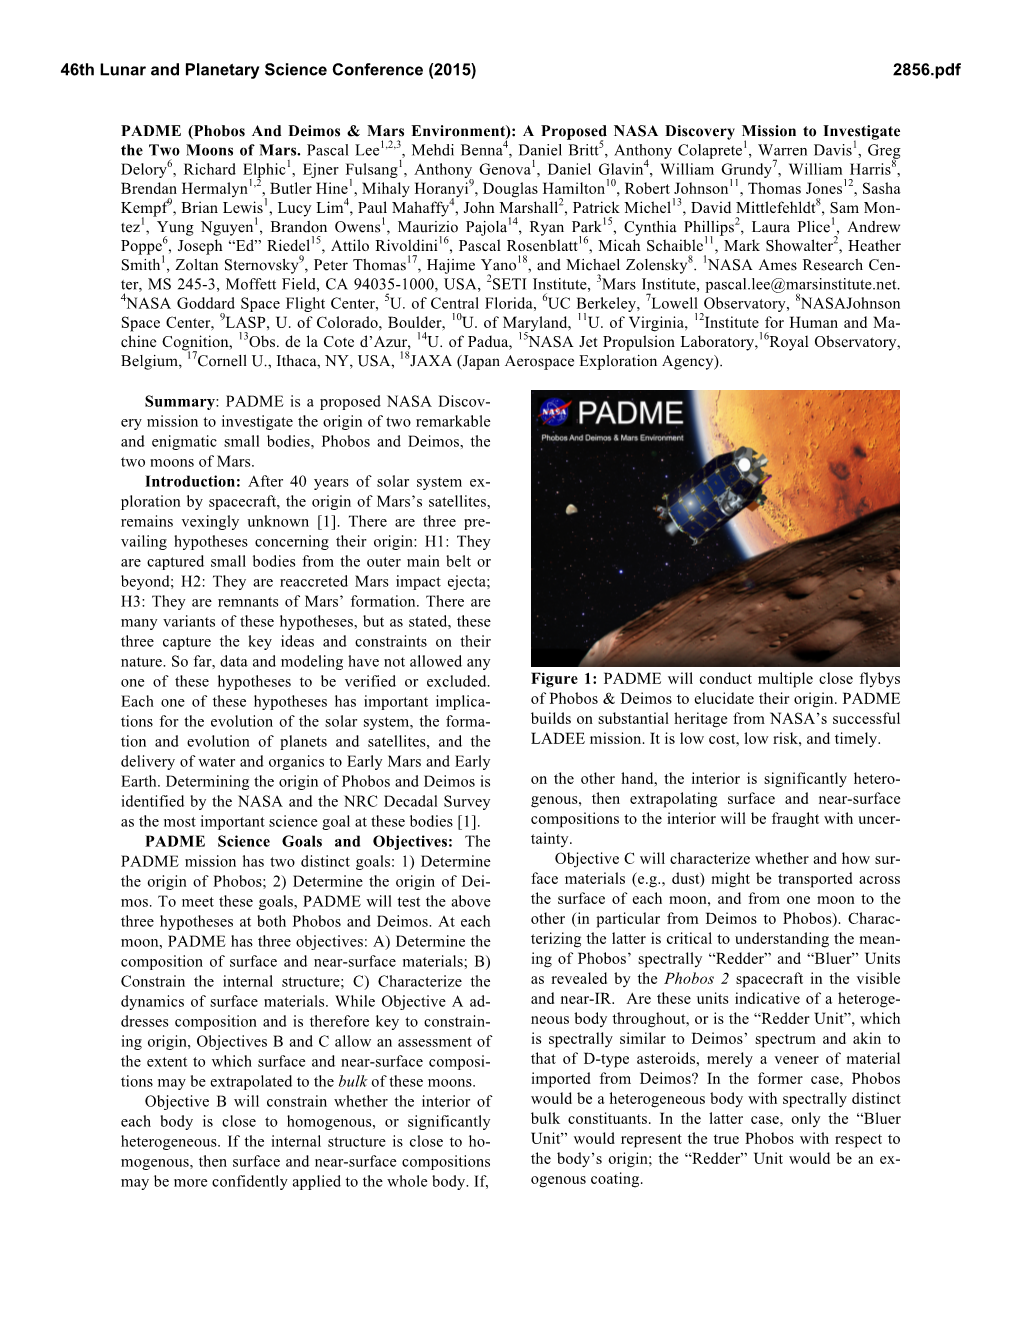 PADME (Phobos and Deimos & Mars Environment)